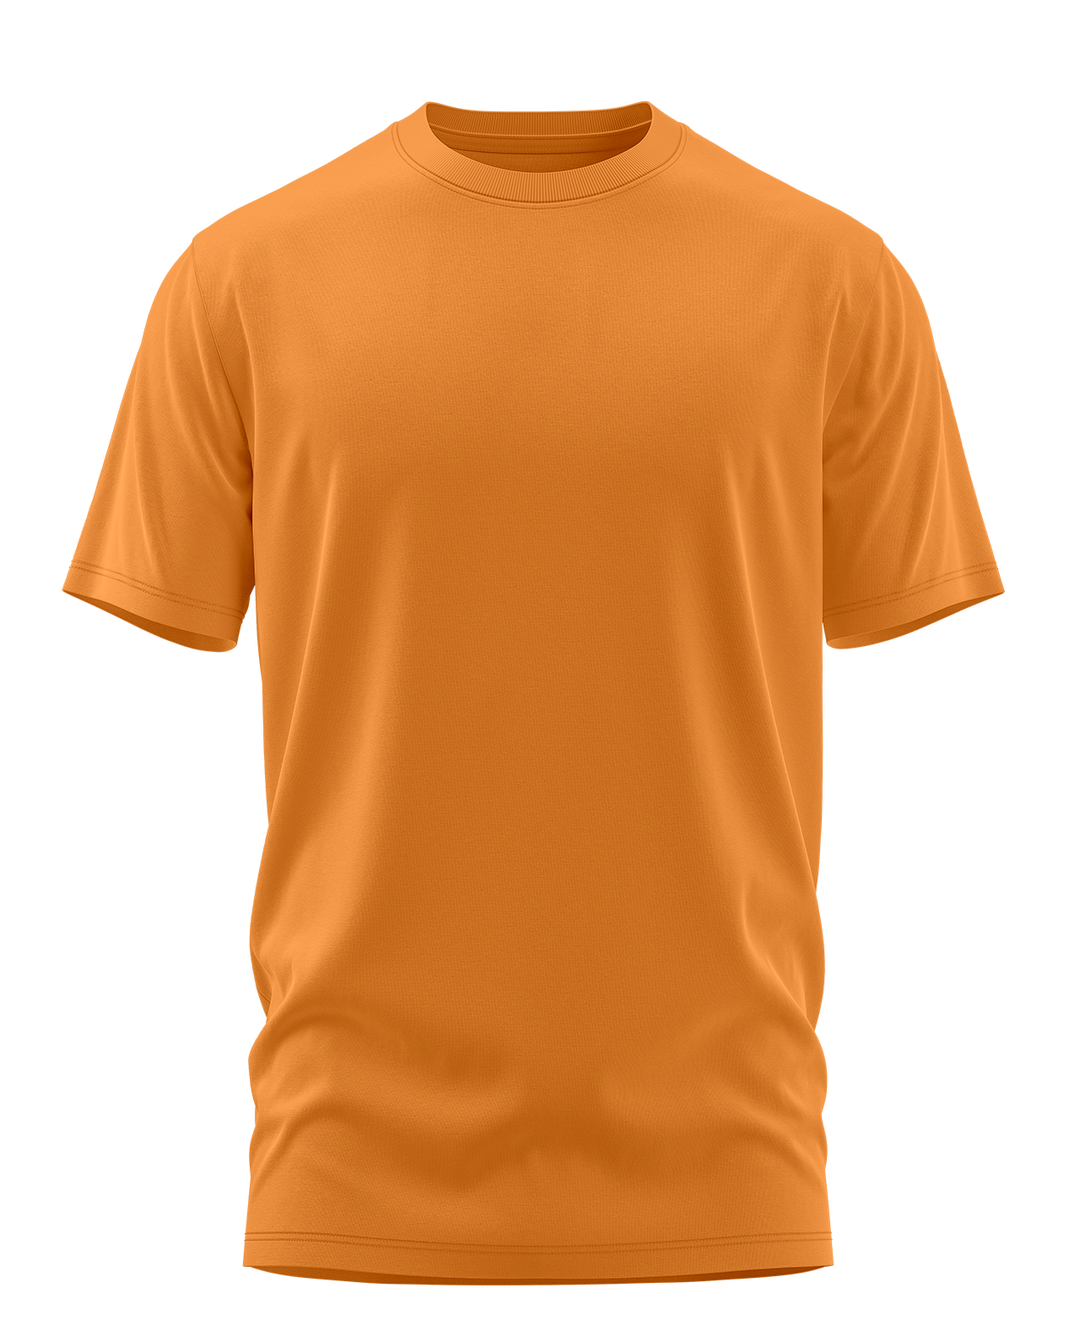 Trinizen Basics T-shirt